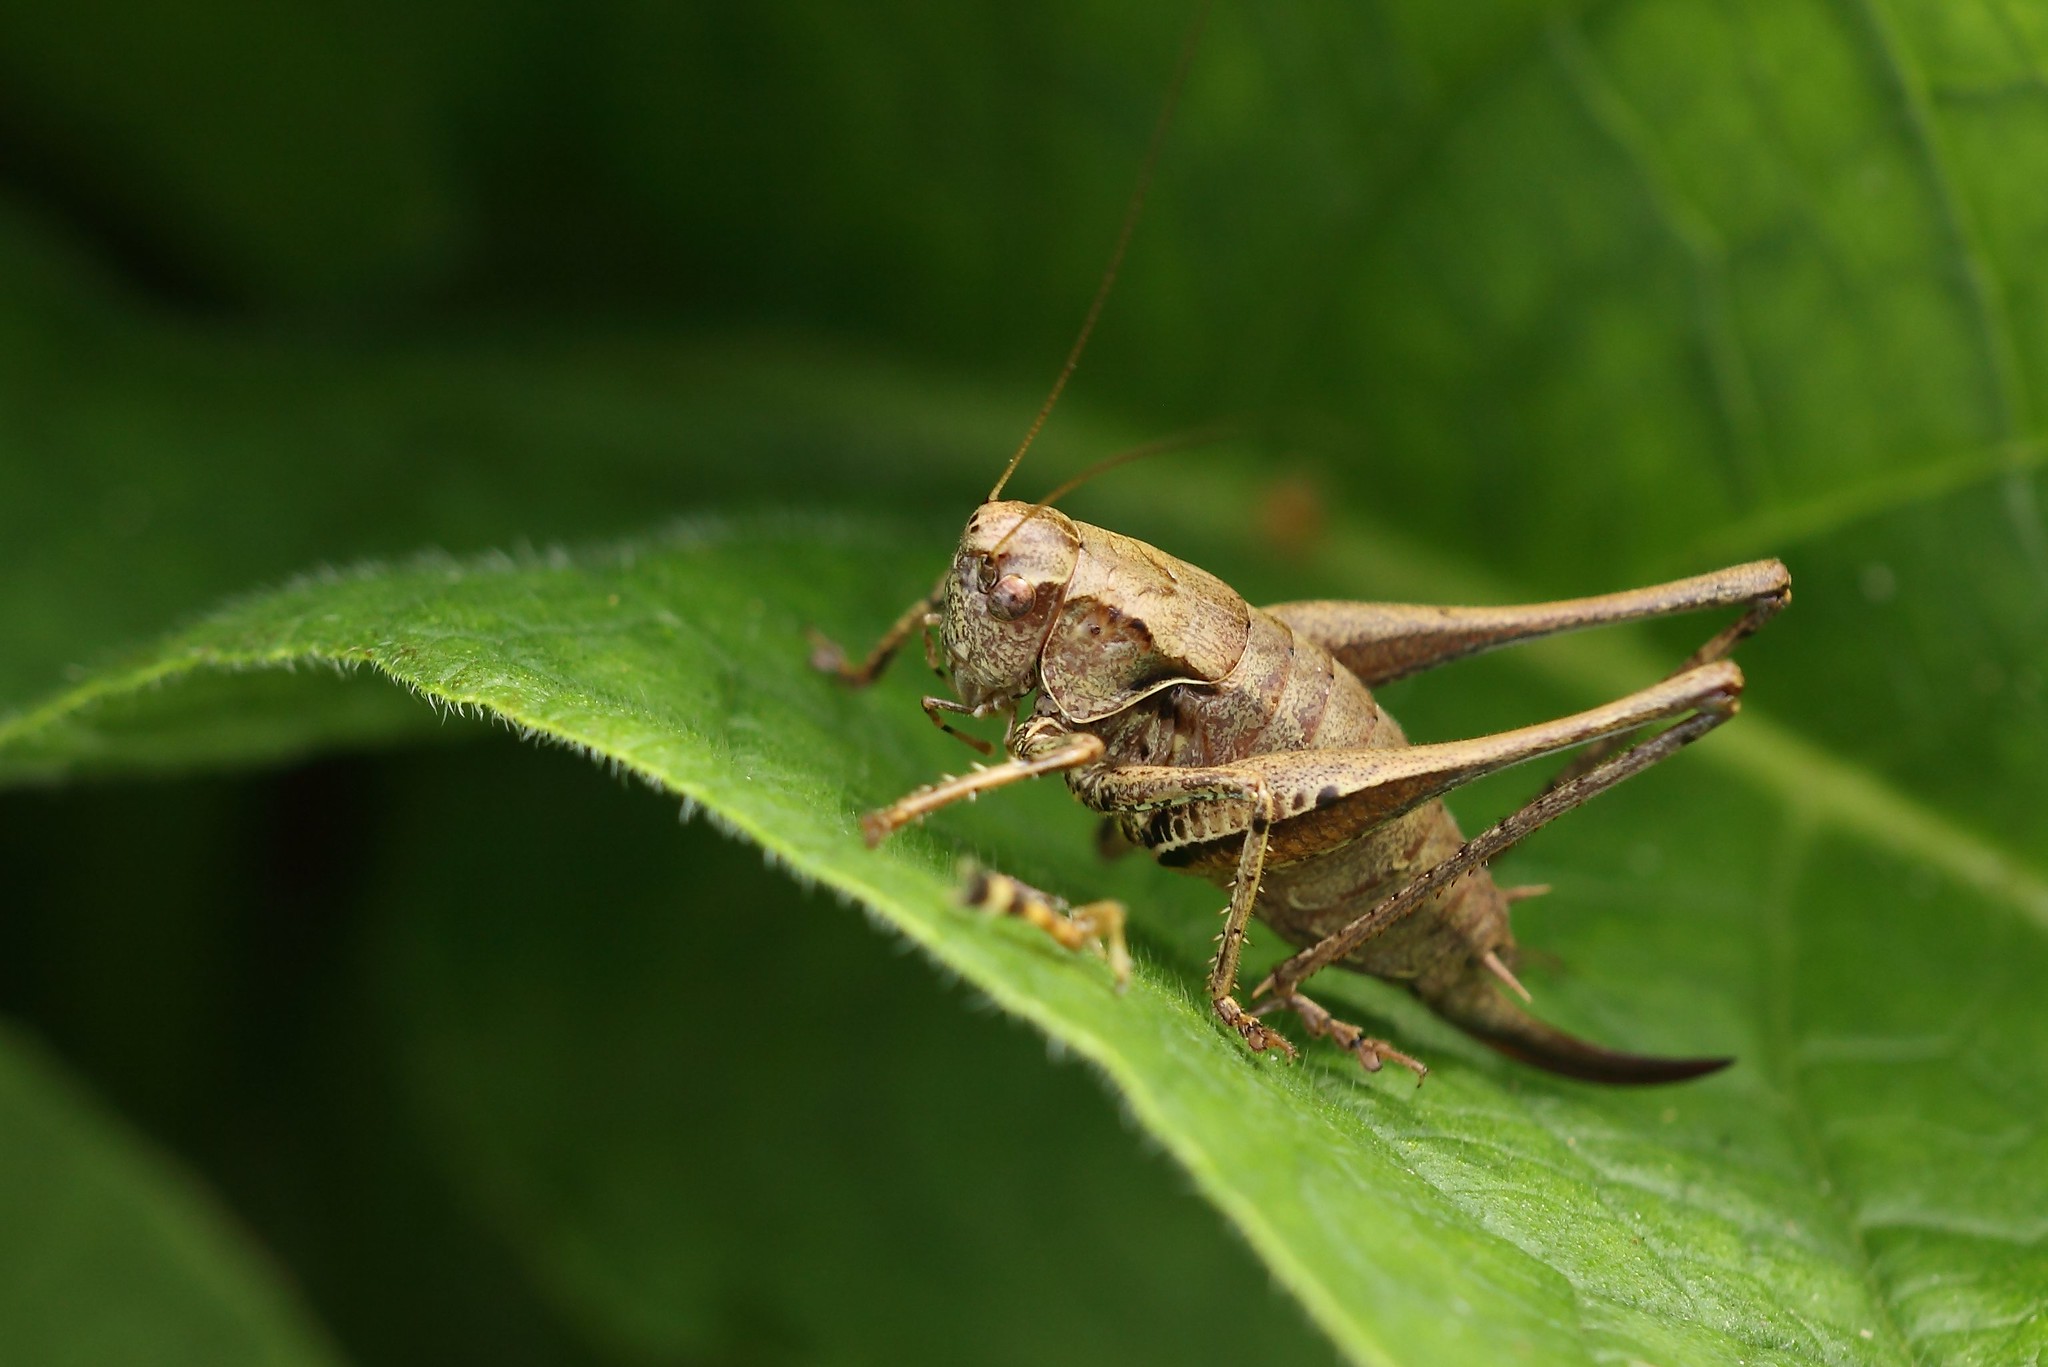 Dark Bush Cricket sat on a leaf poised to jump.